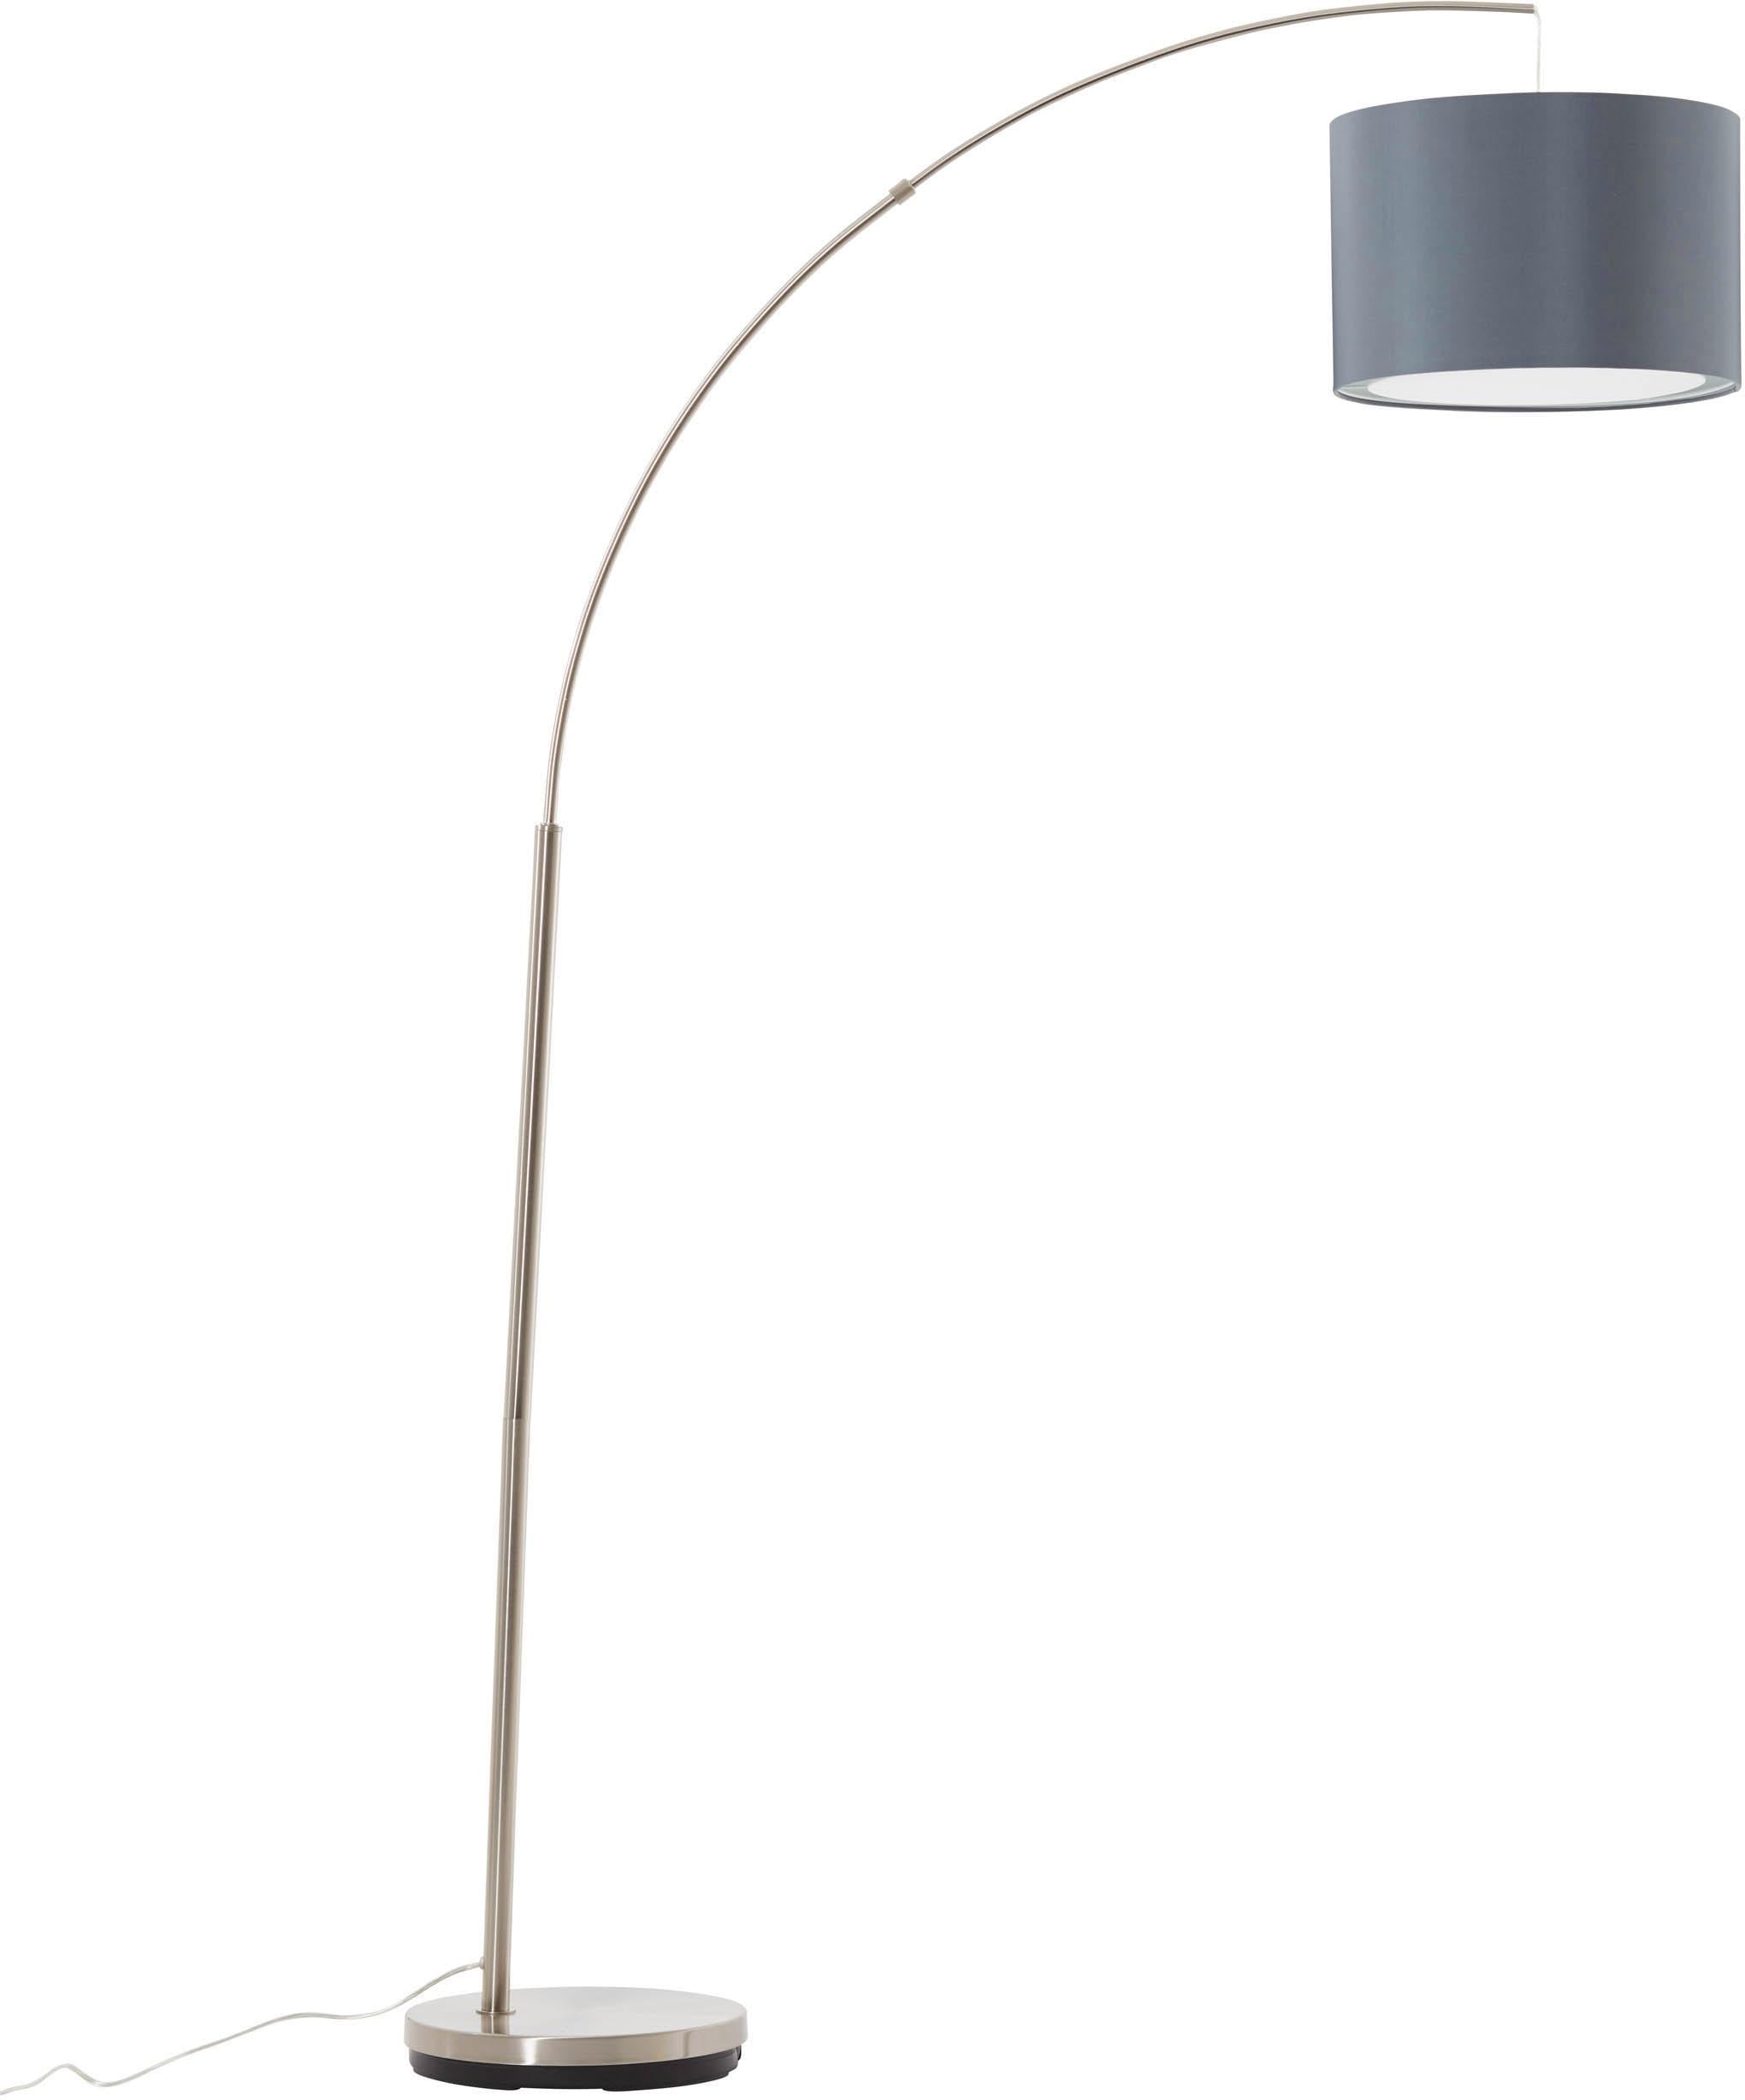 Brilliant Bogenlampe »Clarie«, 1 flammig-flammig, 29cm Höhe, E27 max. 60W, LED geeignet, mit grauem Textilschirm